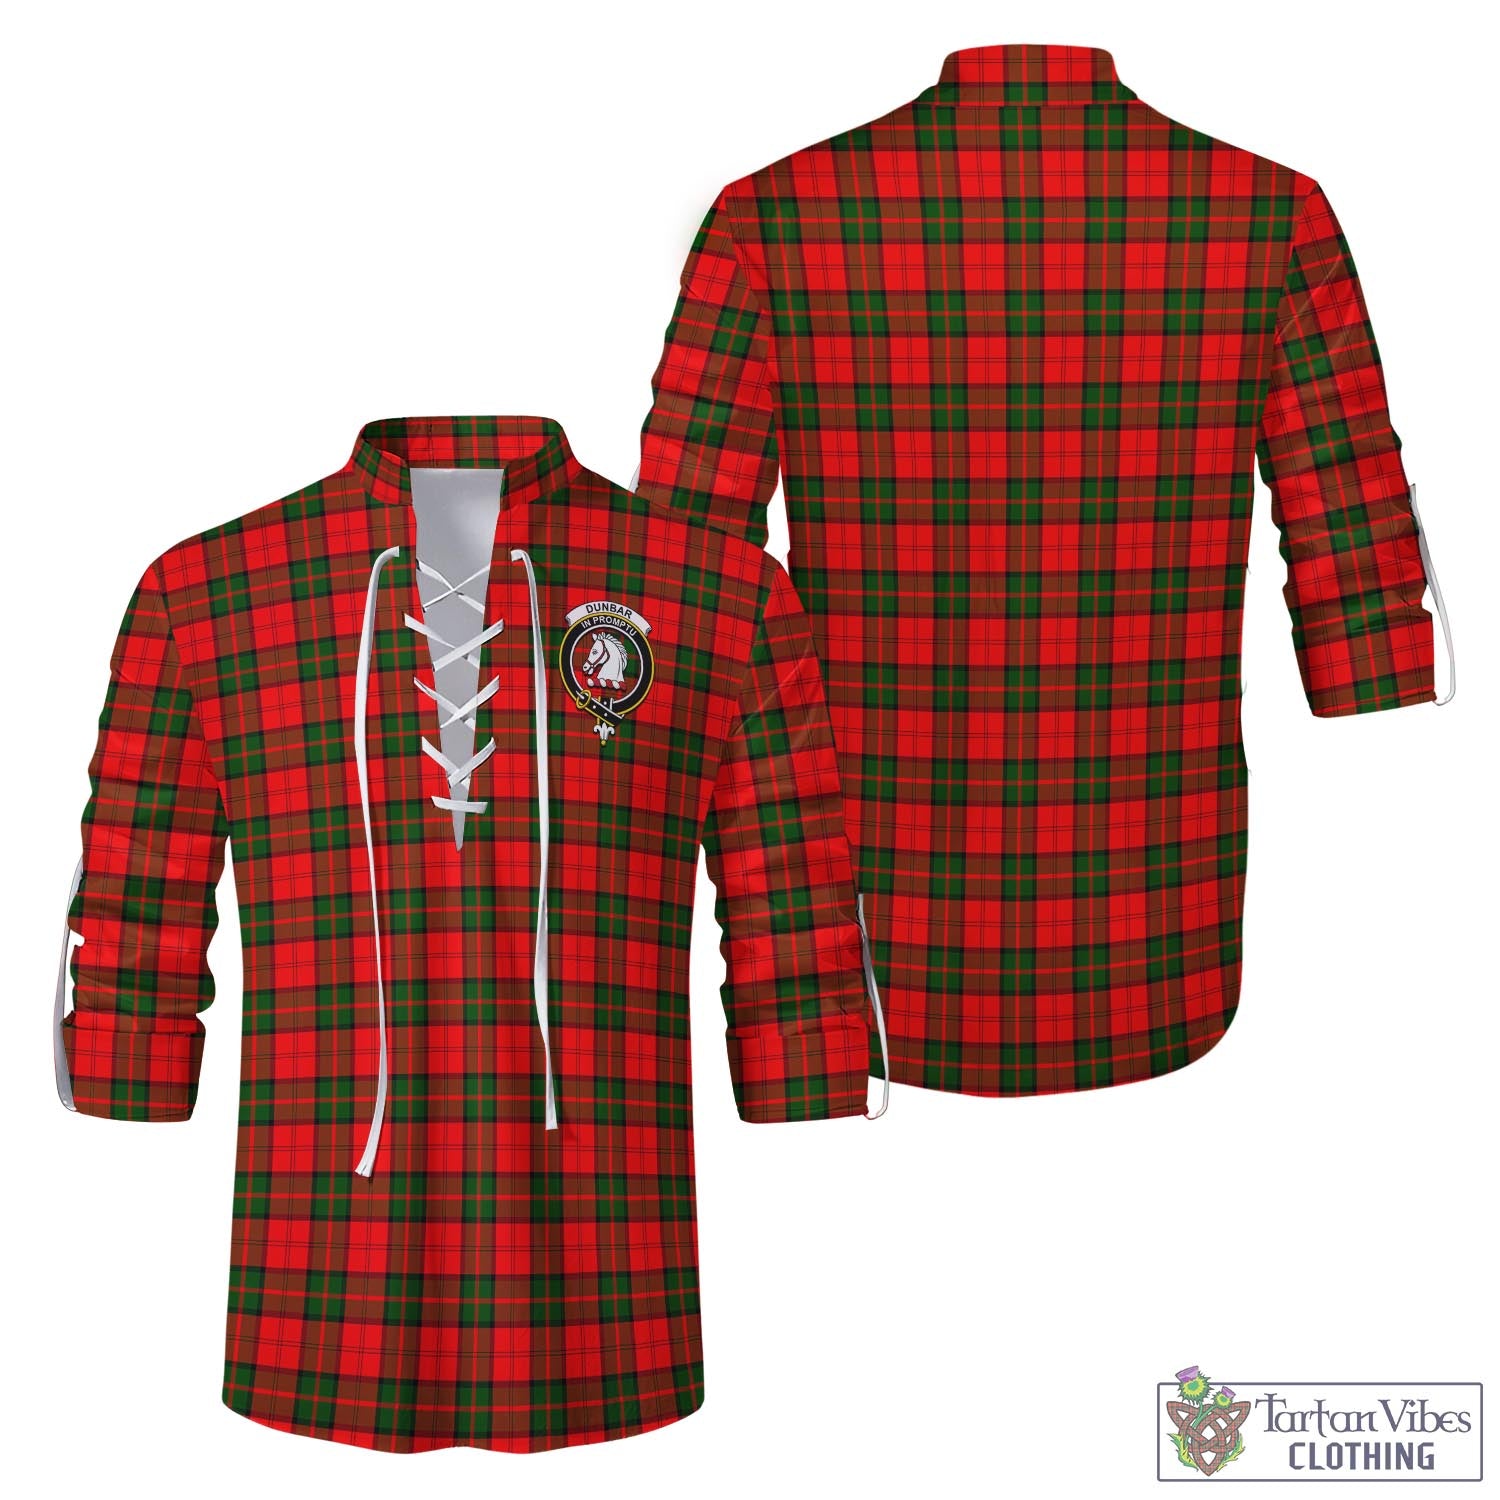 Tartan Vibes Clothing Dunbar Modern Tartan Men's Scottish Traditional Jacobite Ghillie Kilt Shirt with Family Crest